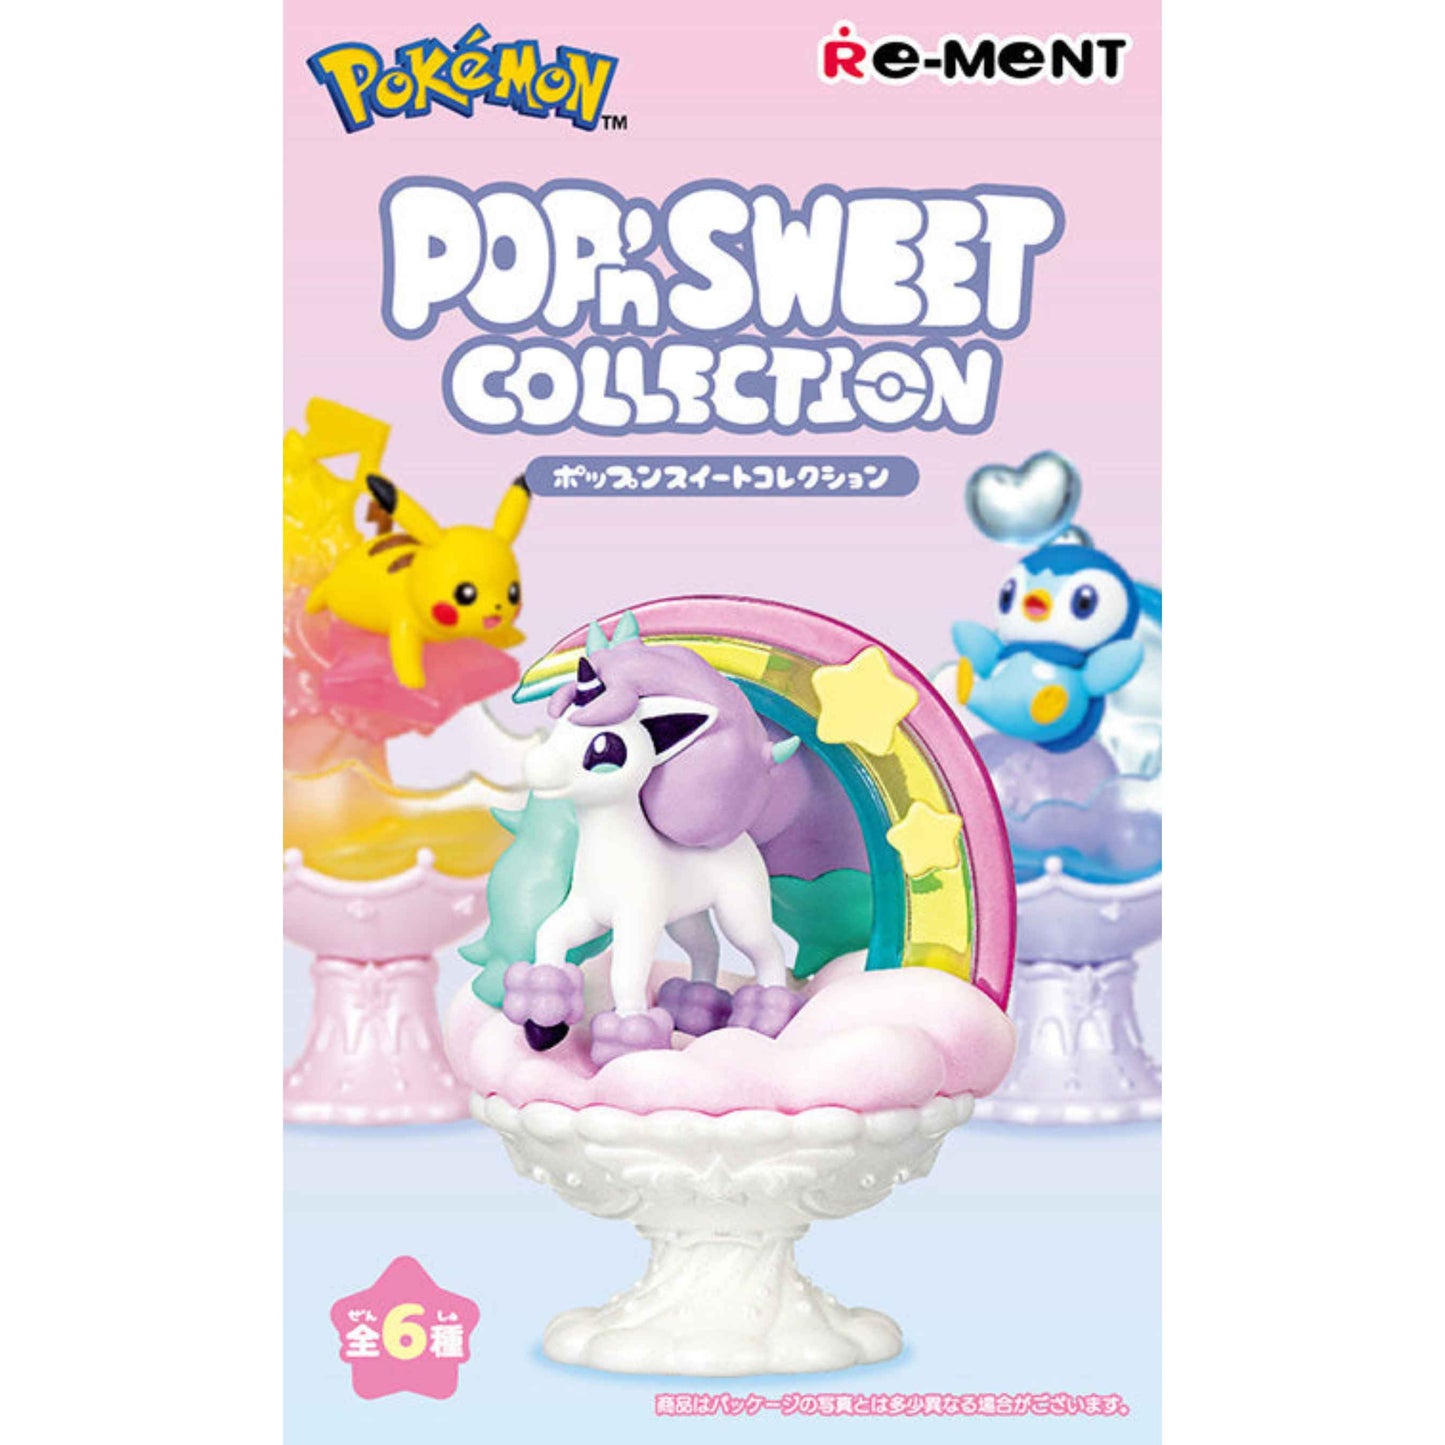 【New】re-Ment: Pokémon Pop'n Sweet Collection Series Blind Box Random Style